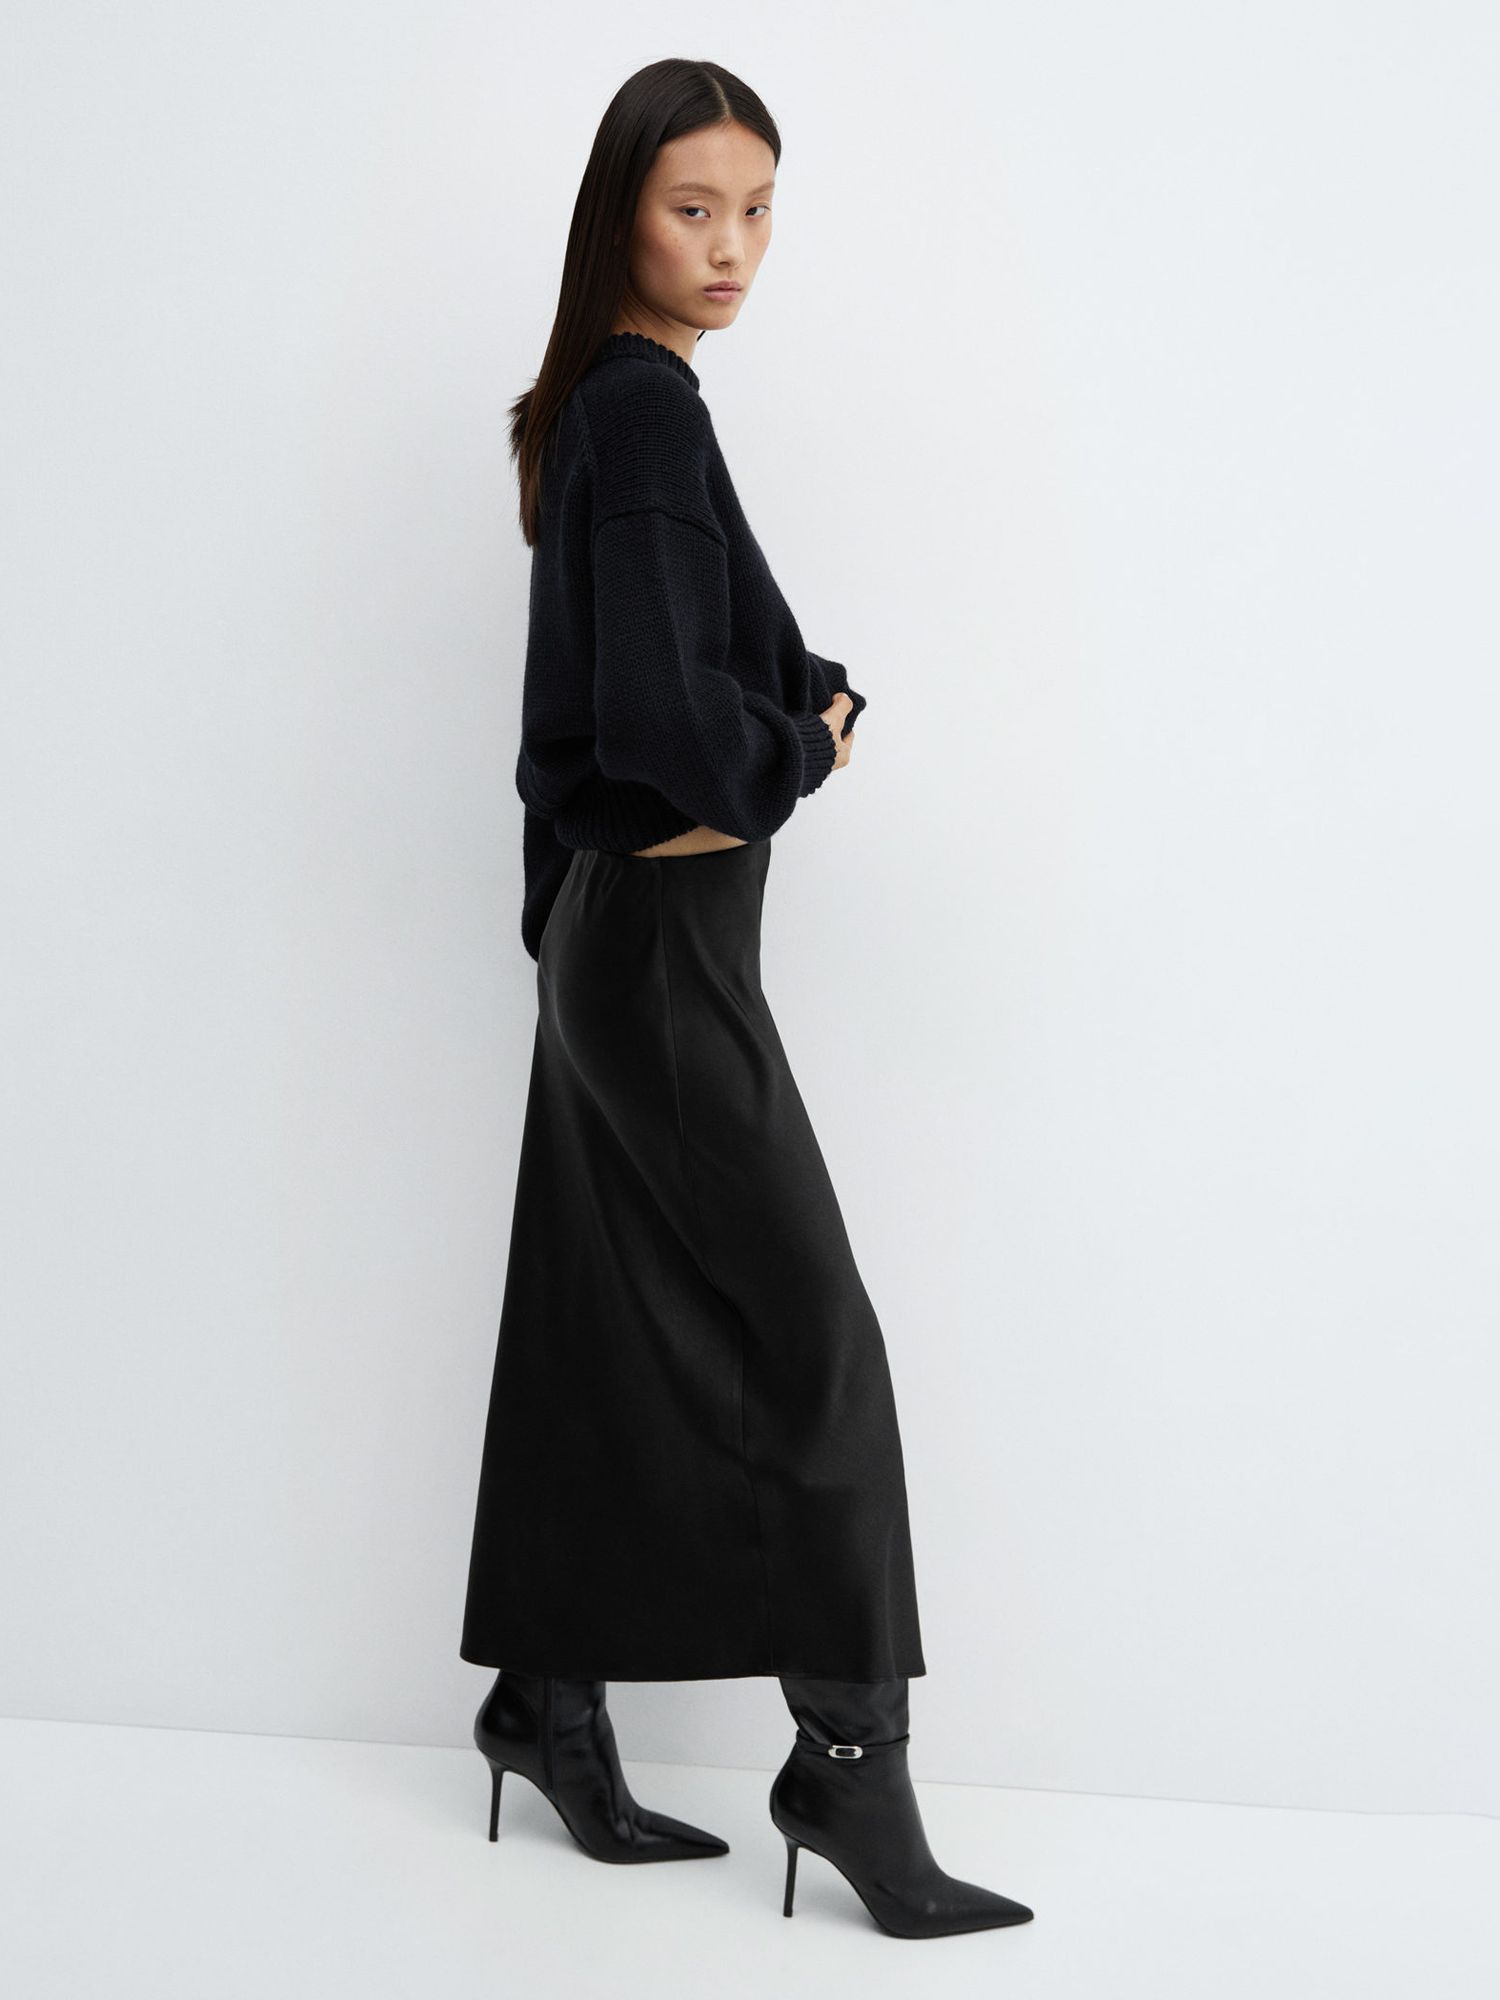 Buy Mango Mia Satin Slip Midi Skirt Online at johnlewis.com